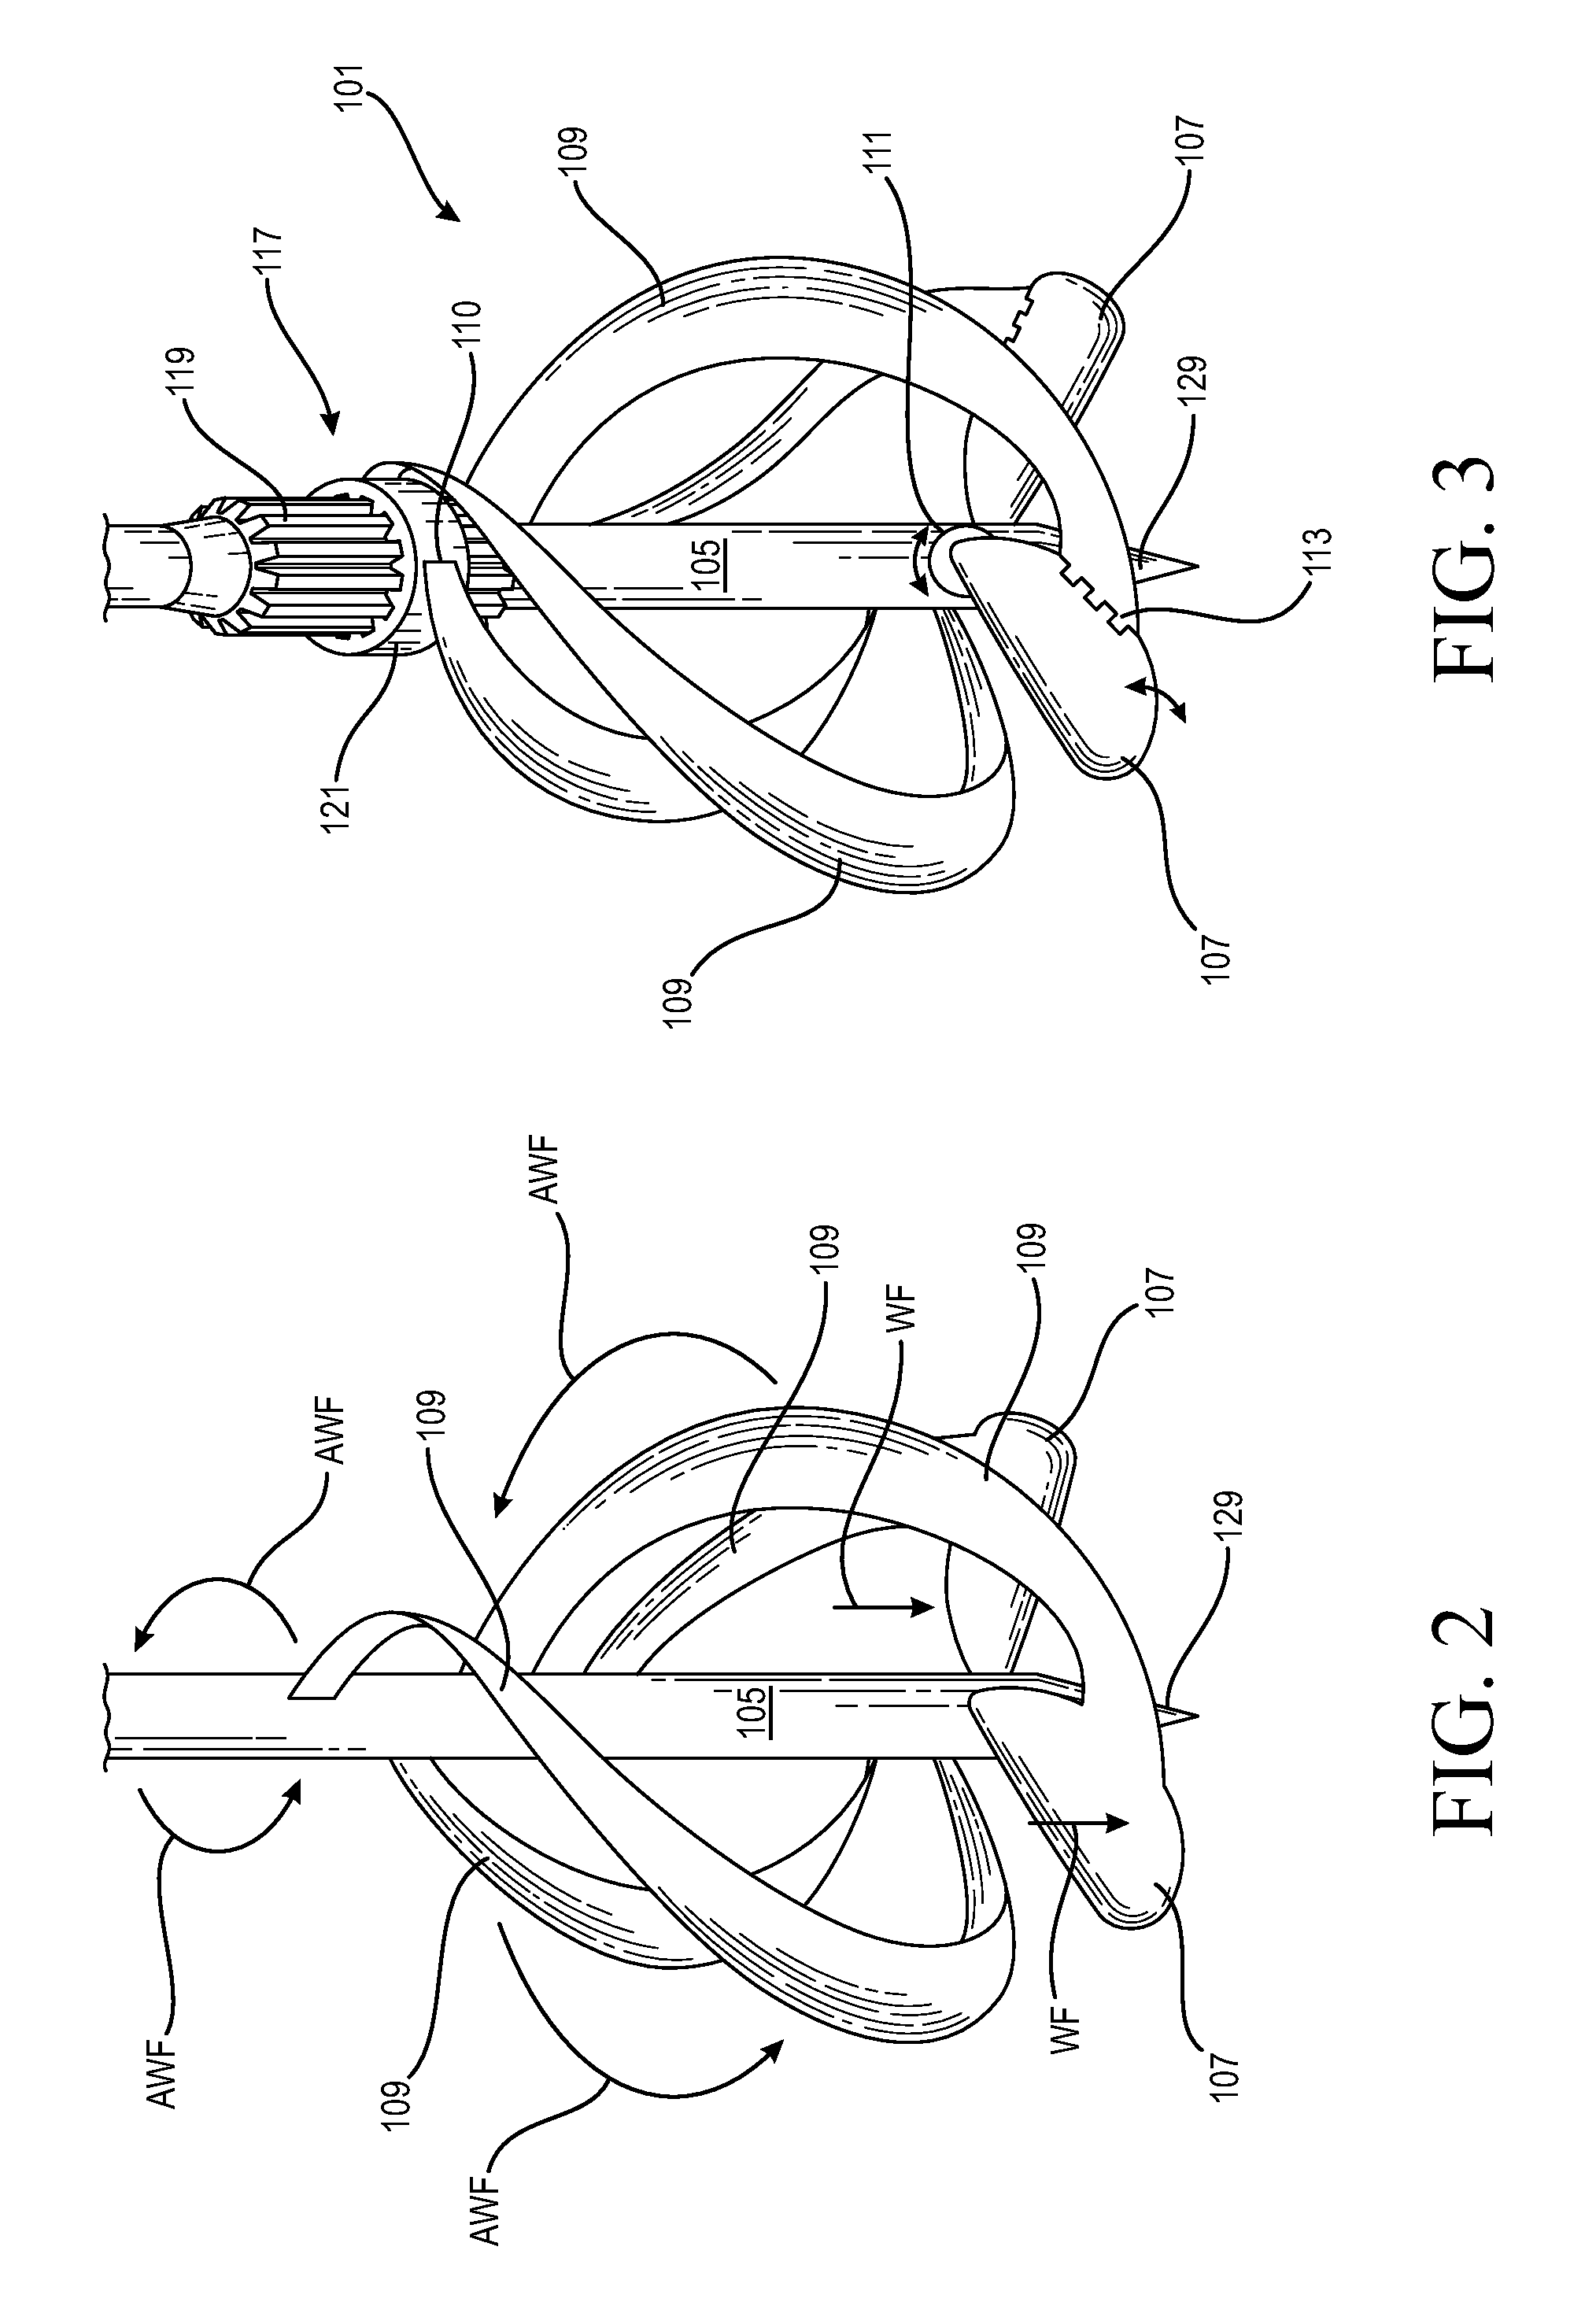 Turbine apparatus and methods